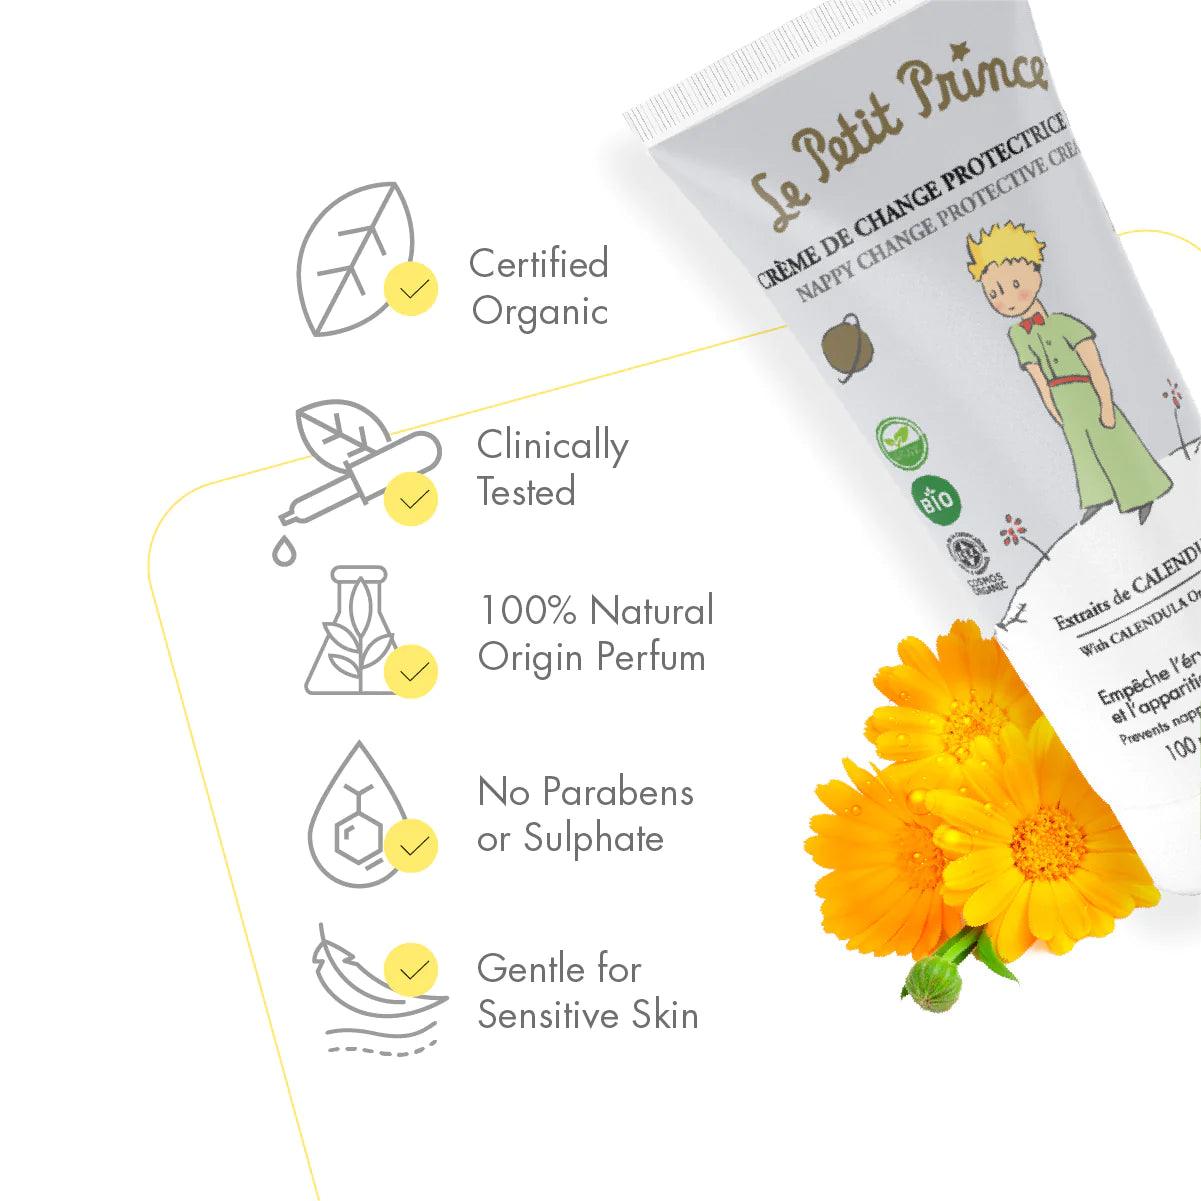 Le Petit Prince Nappy Change Protective Cream - 100 ml - Wellness Shoppee